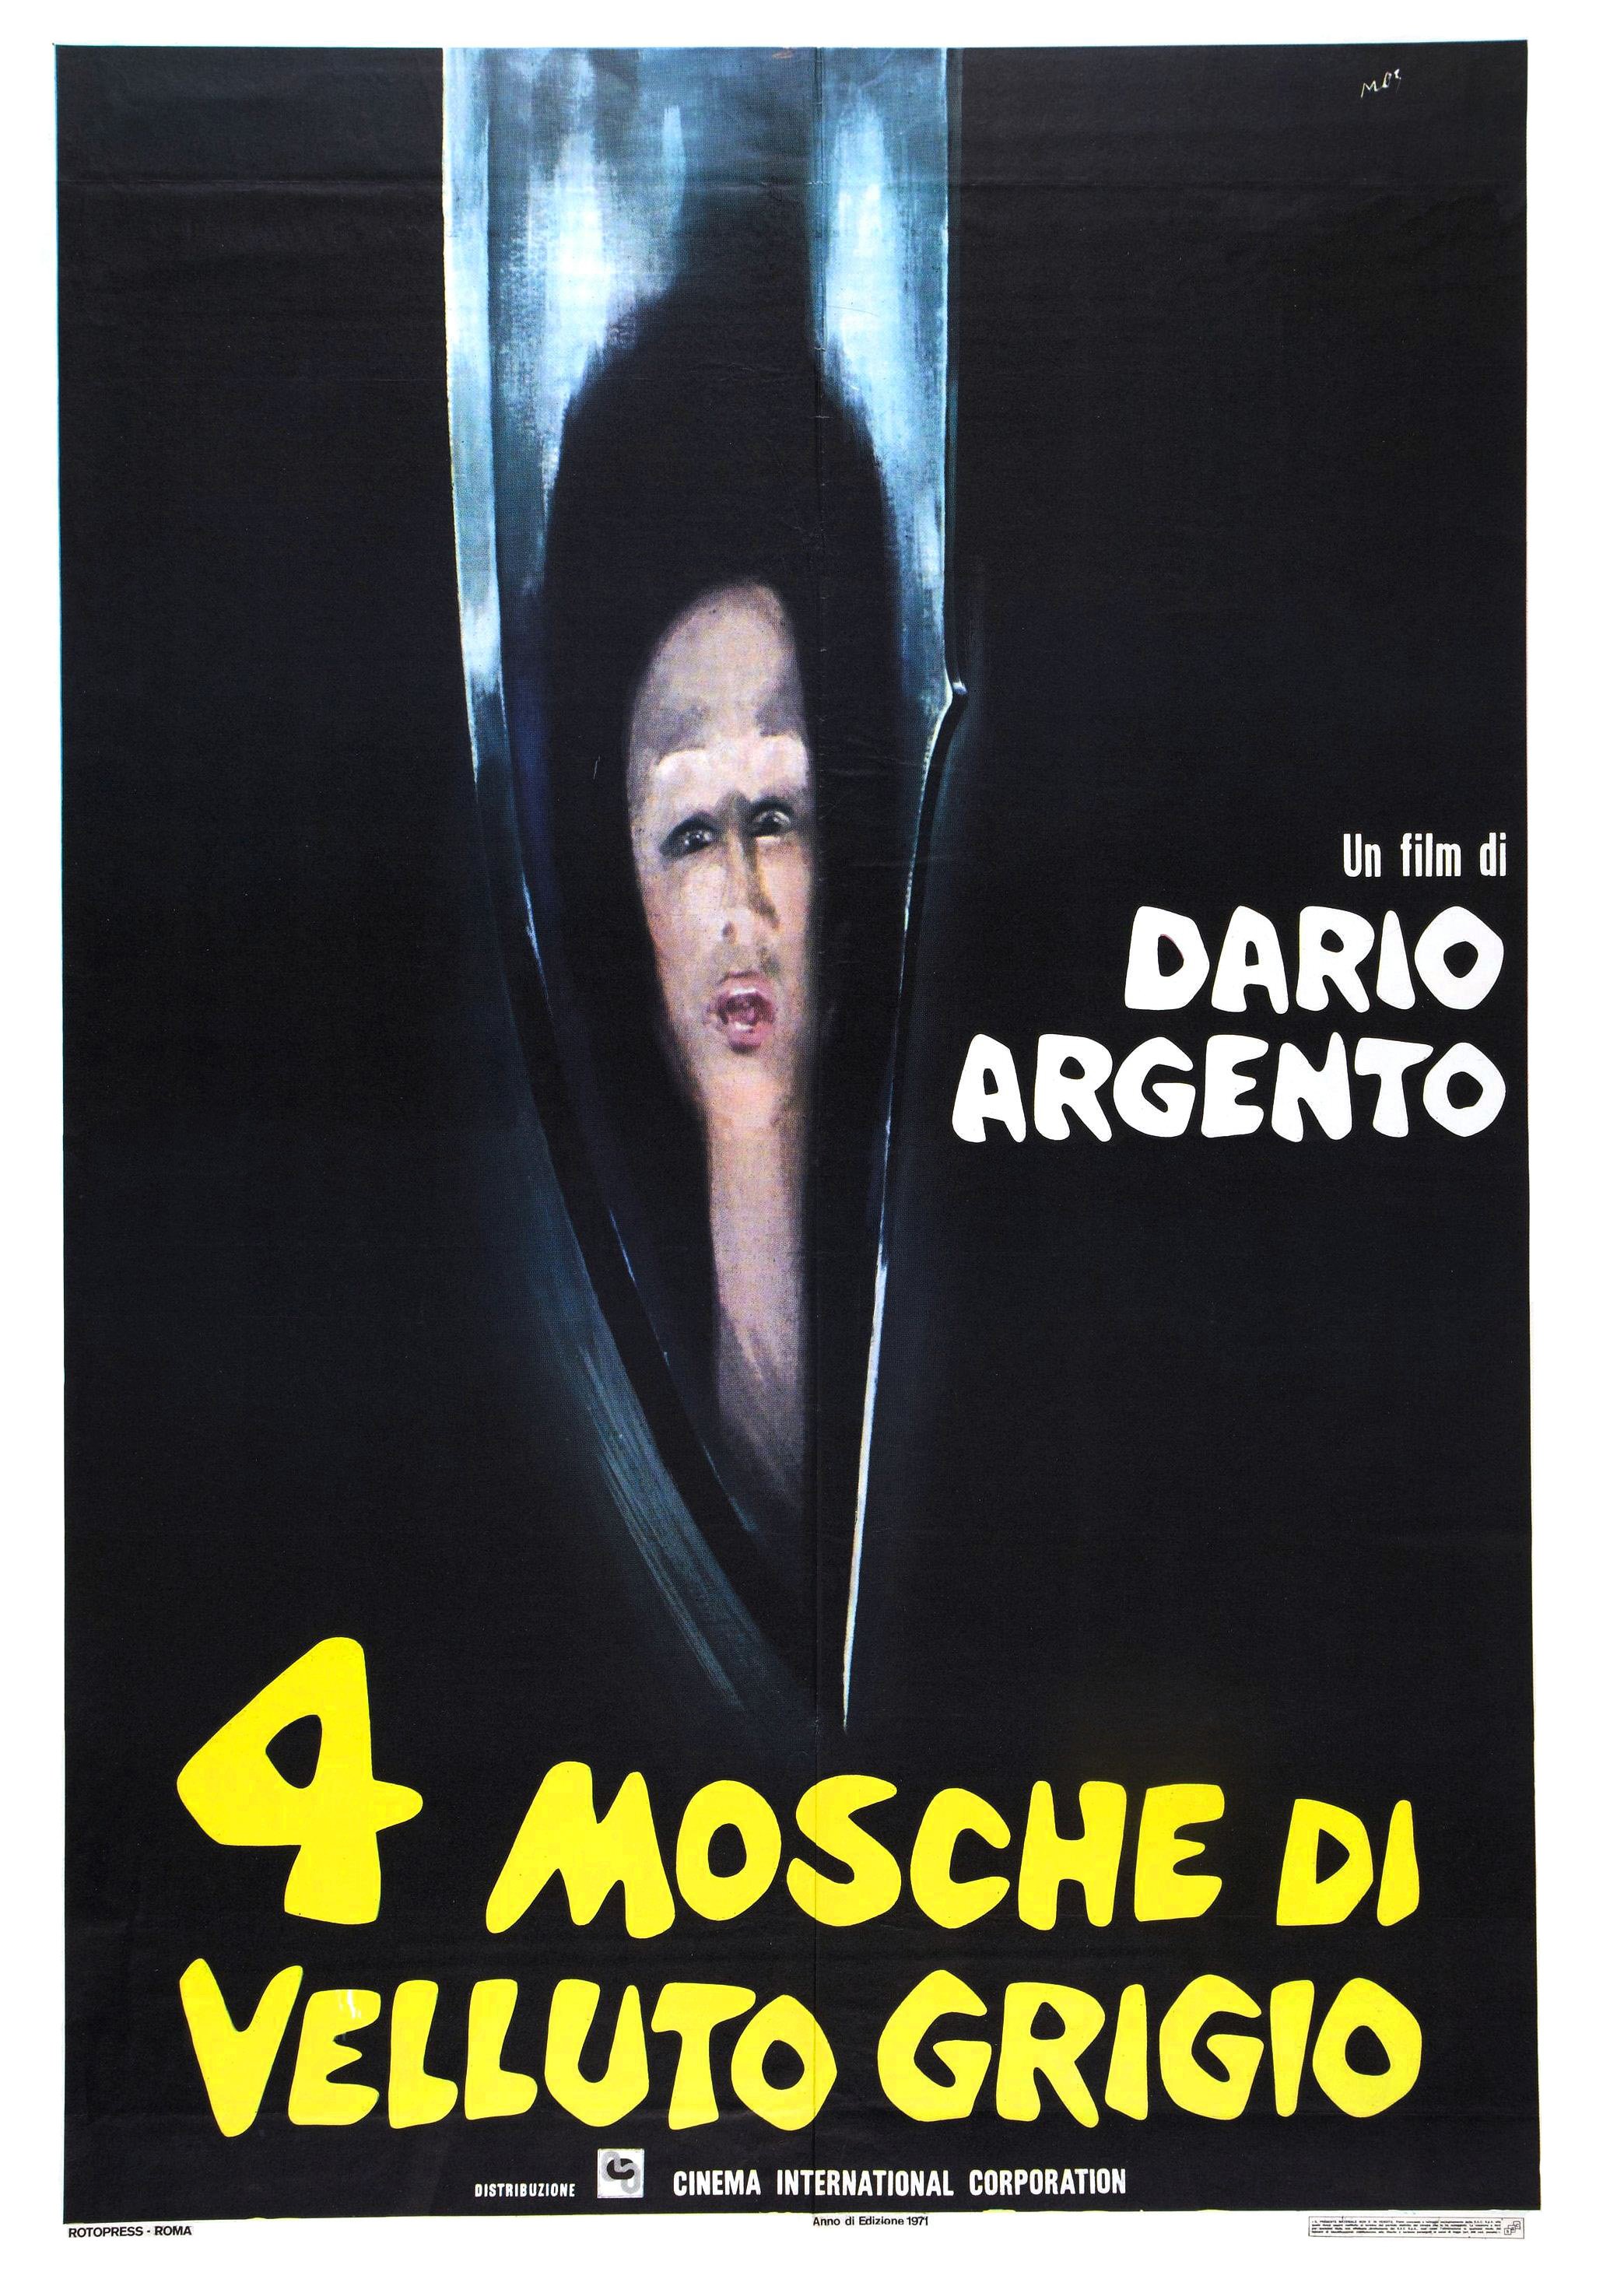 L'affiche originale du film 4 mosche di velluto grigio en italien